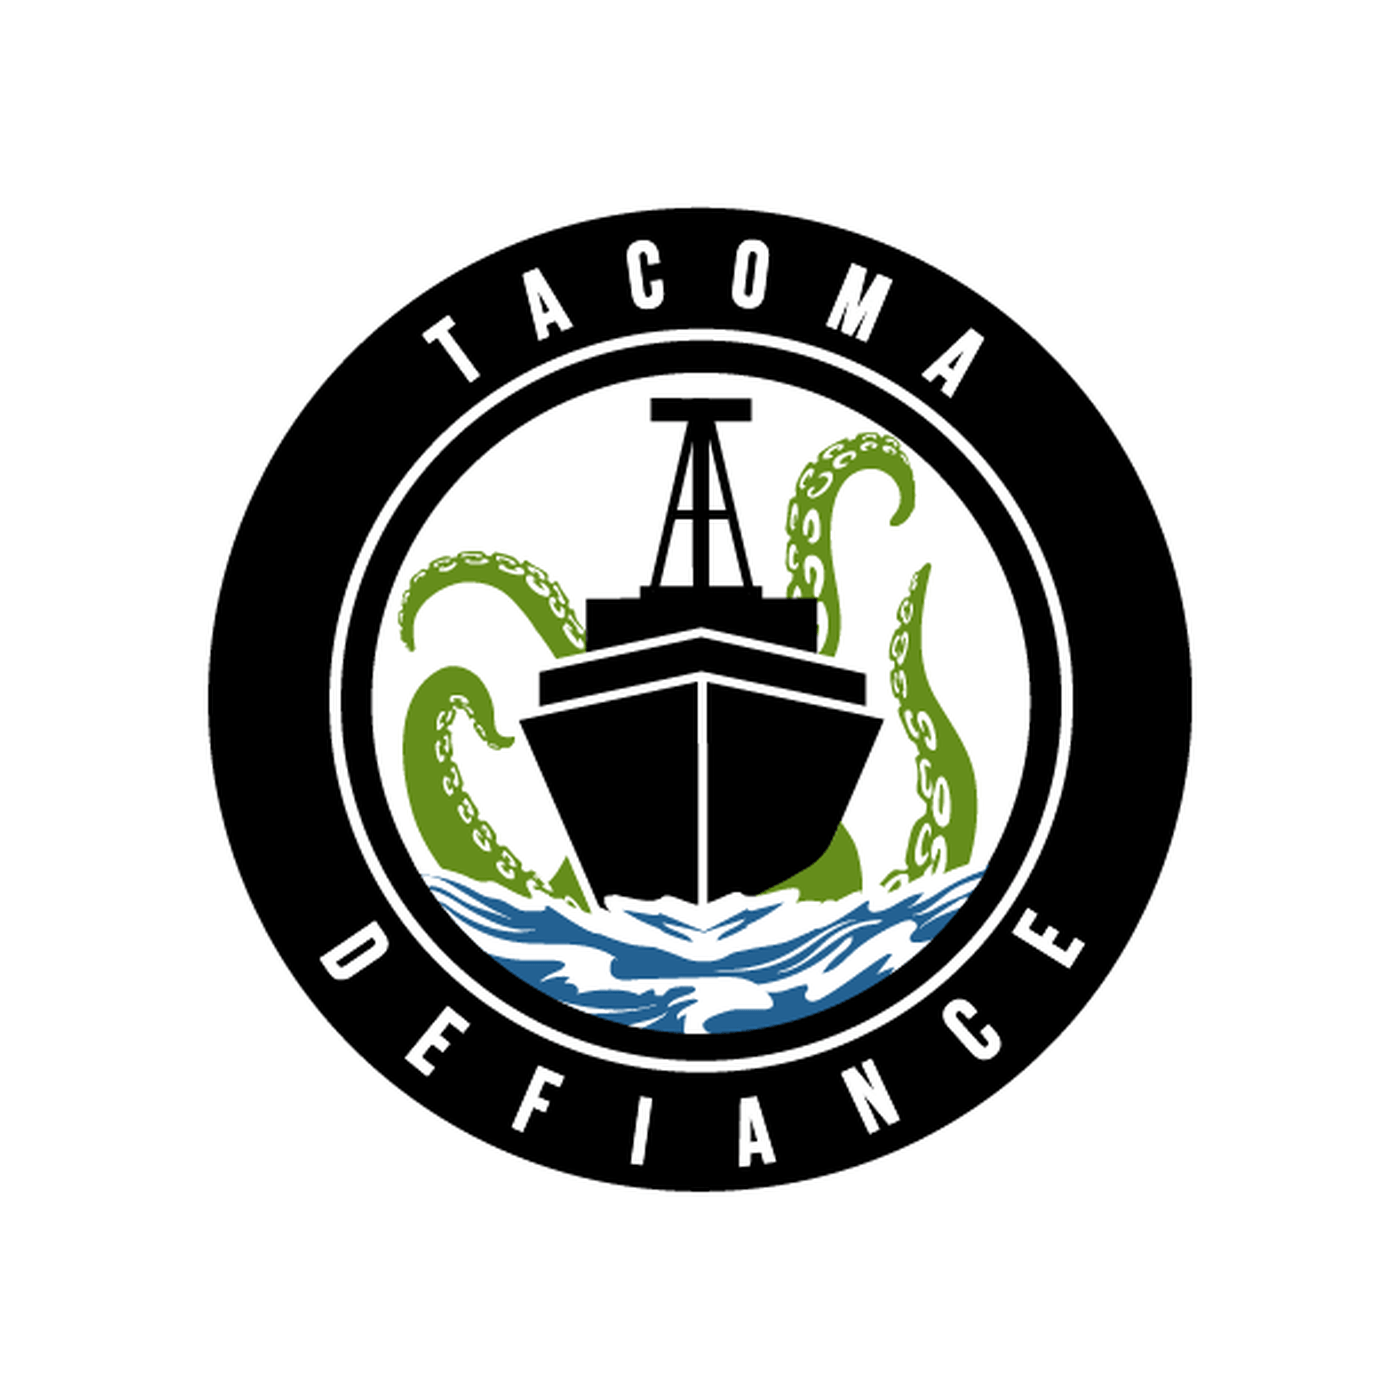 Defiance Logo - Sounders USL affiliate rebrands as Tacoma Defiance